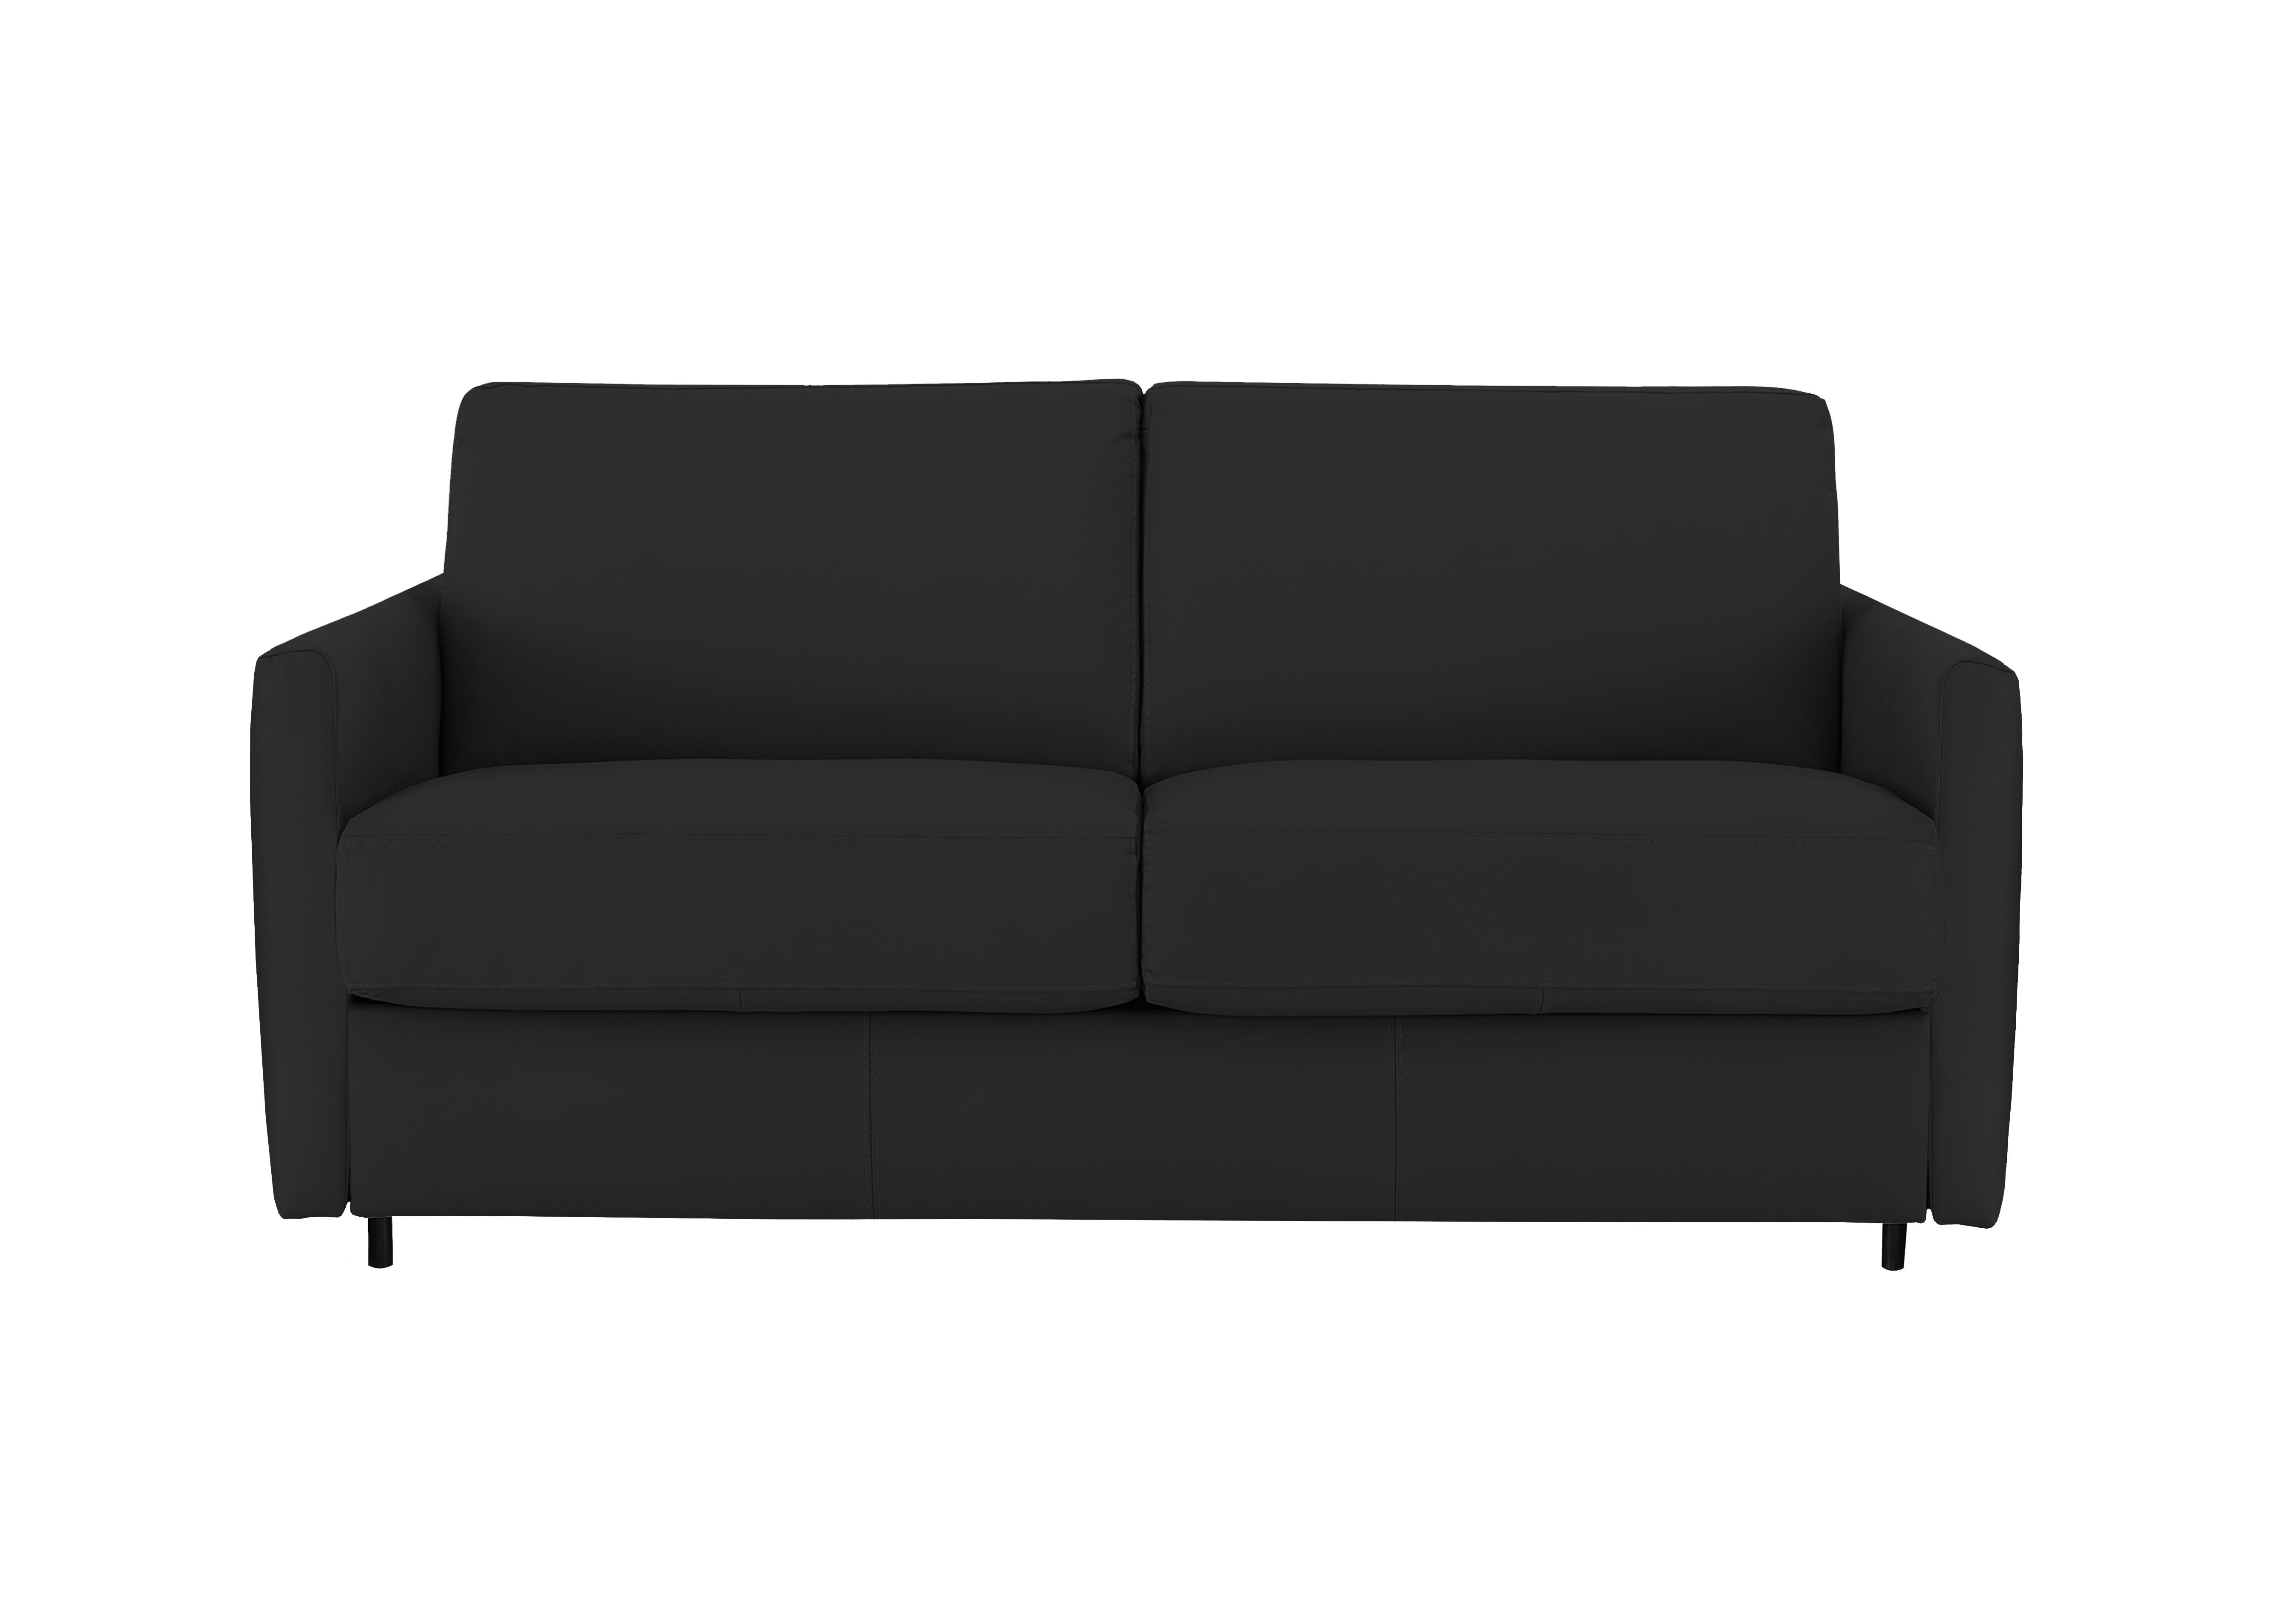 Alcova 2.5 Seater Leather Sofa Bed with Slim Arms in Torello Nero 71 on Furniture Village